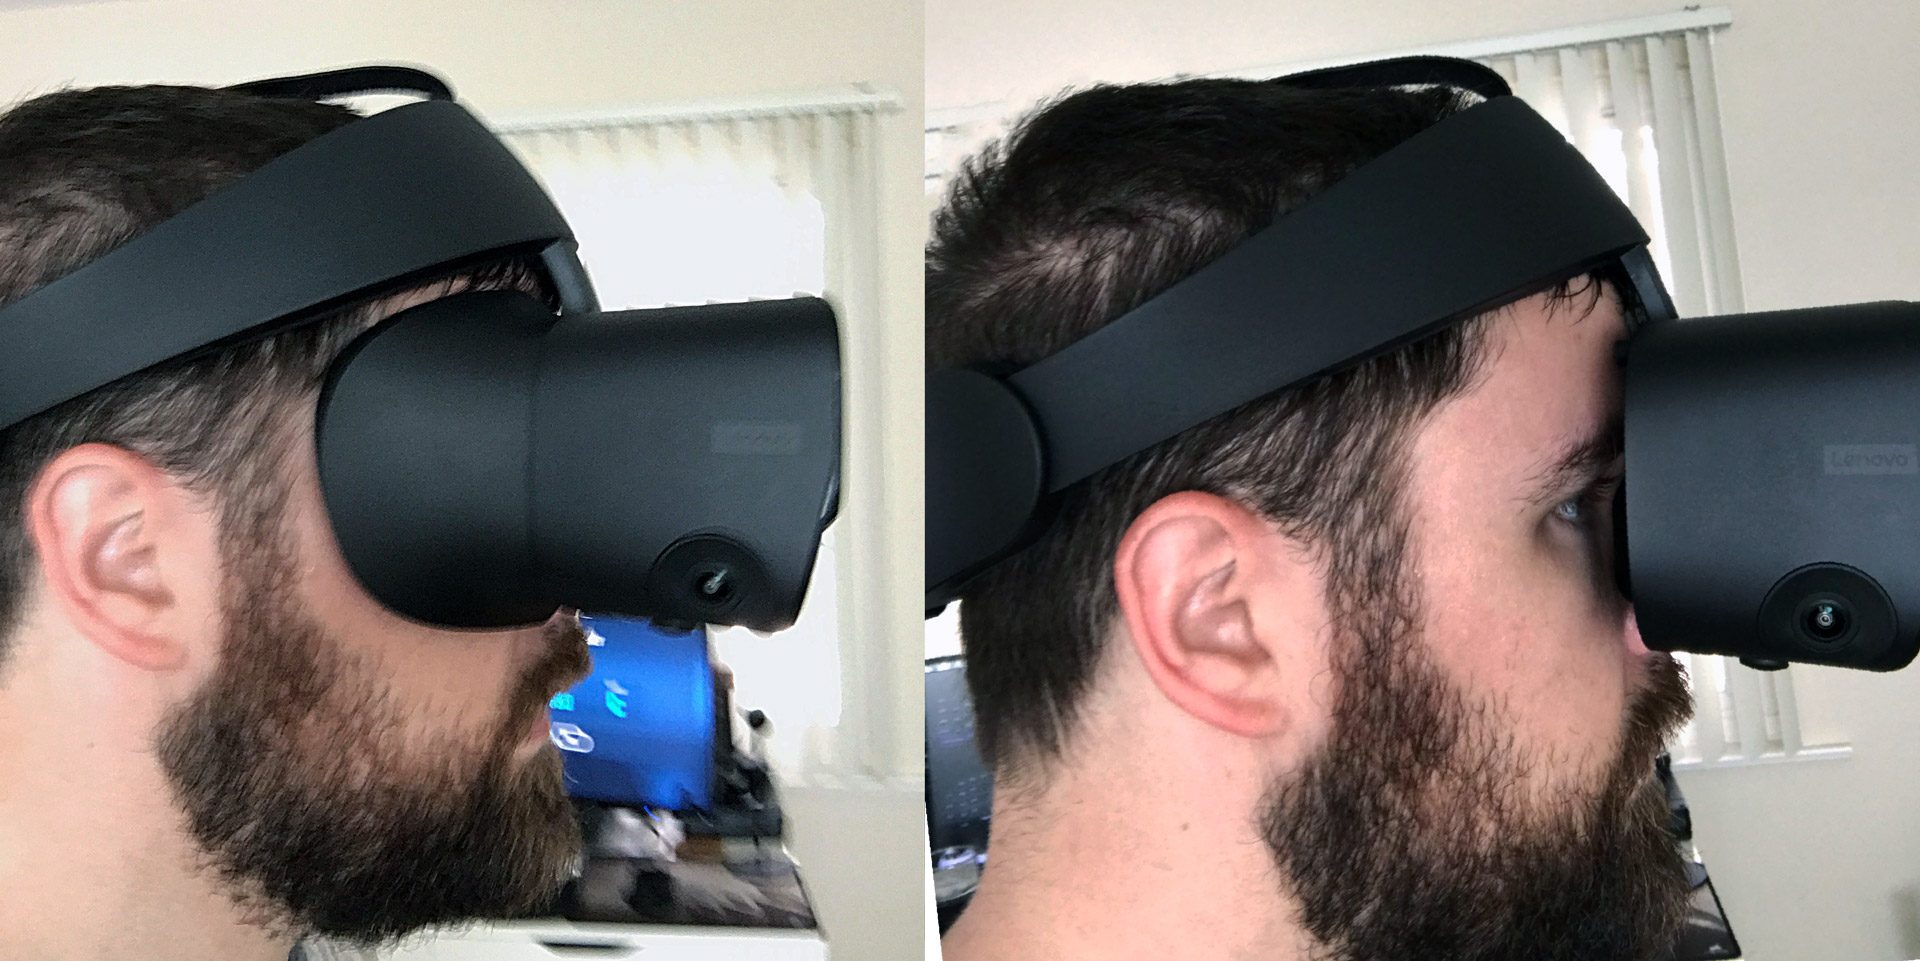 oculus rift s remove faceplate